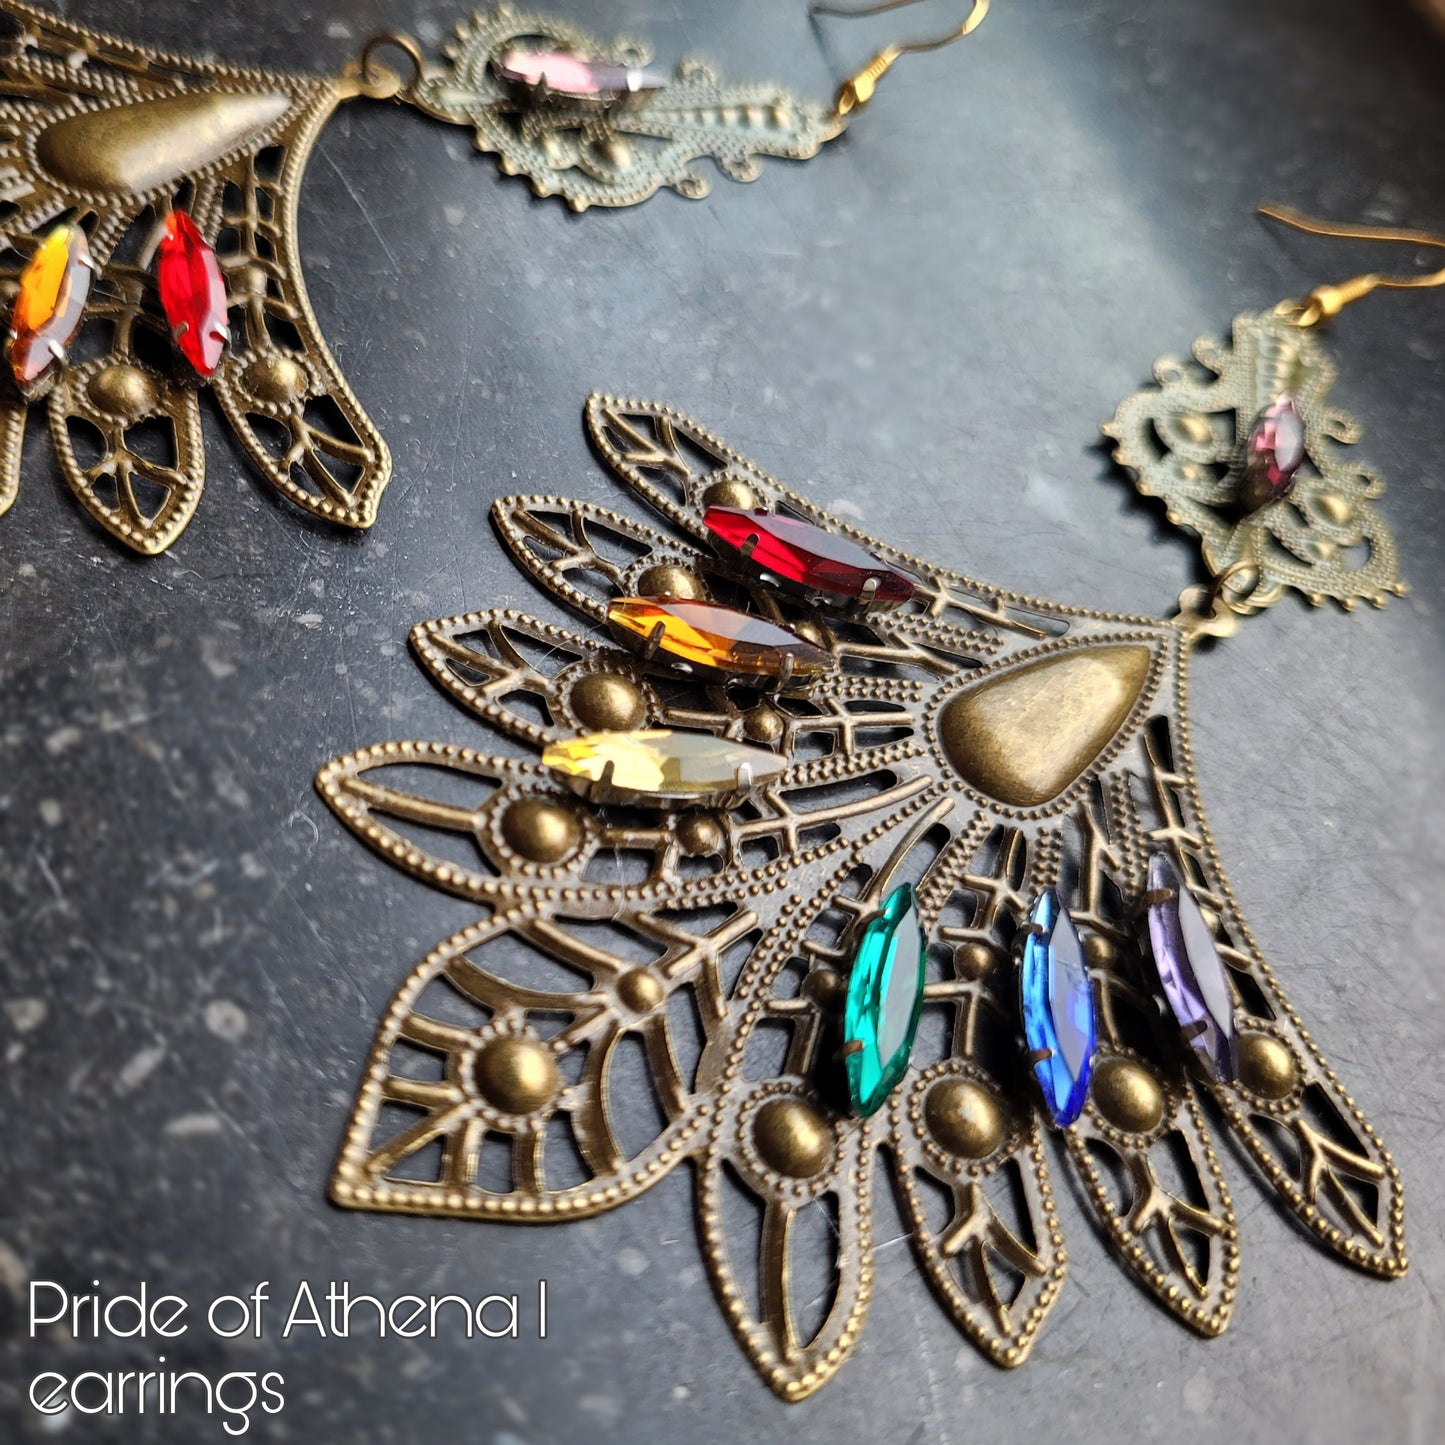 Deusa ex Machina collection: The Pride of Athena earrings